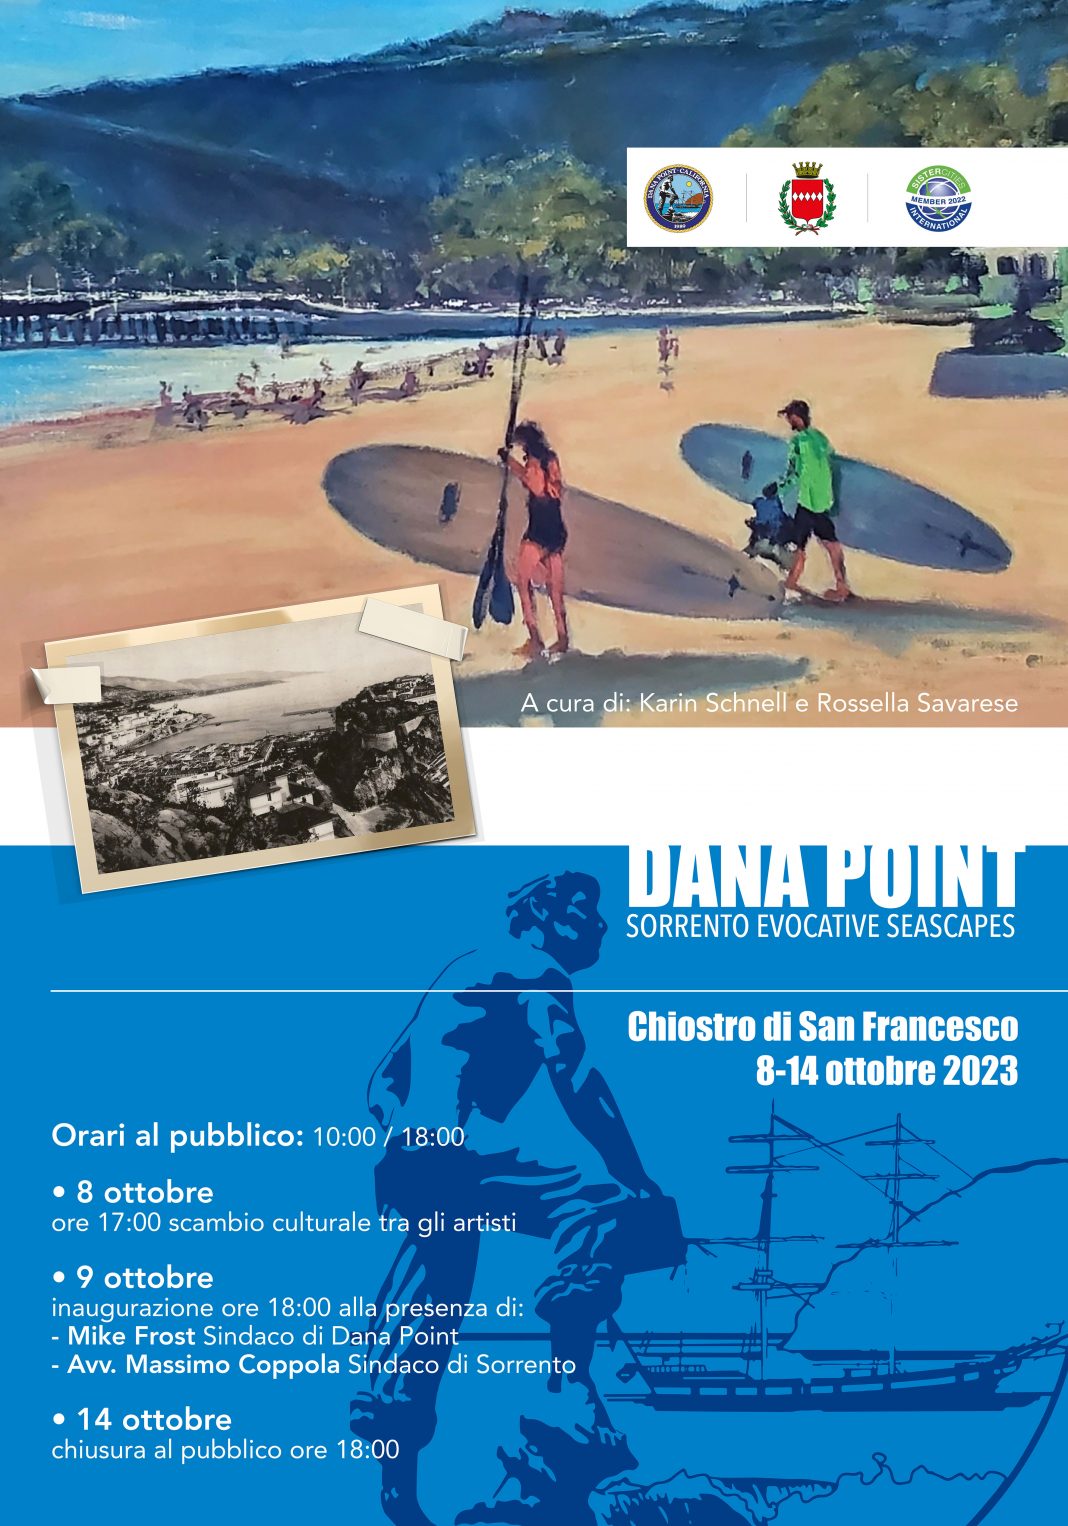 Dana Point – Sorrento evocative seascapeshttps://www.exibart.com/repository/media/formidable/11/img/def/Sorrento_DanaPoint_70x100-locandina-1068x1526.jpg